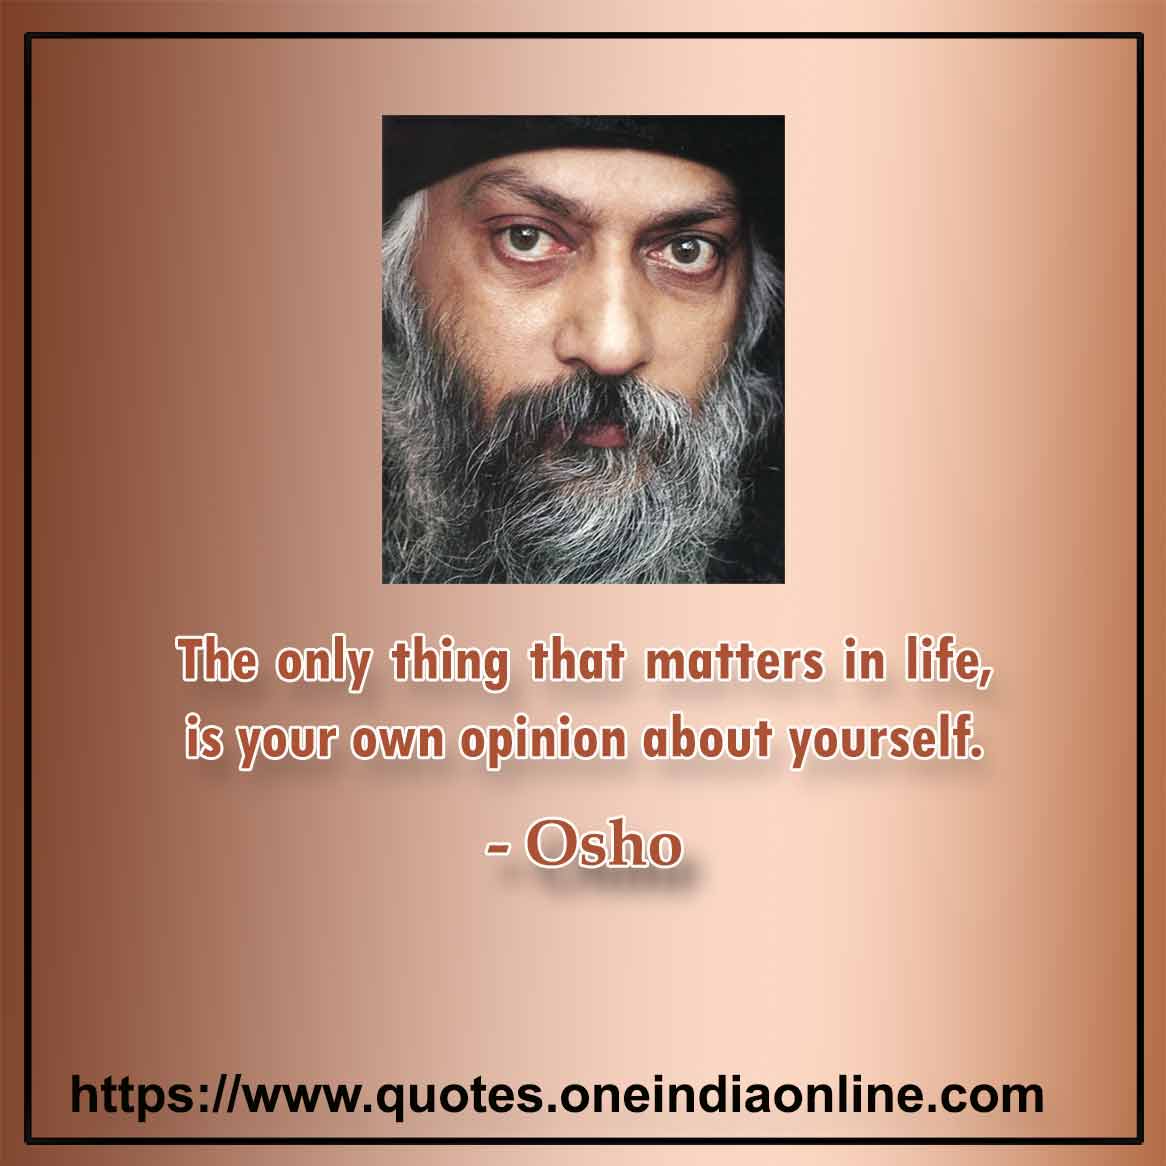 Quotes By Osho On Life Etpmethod